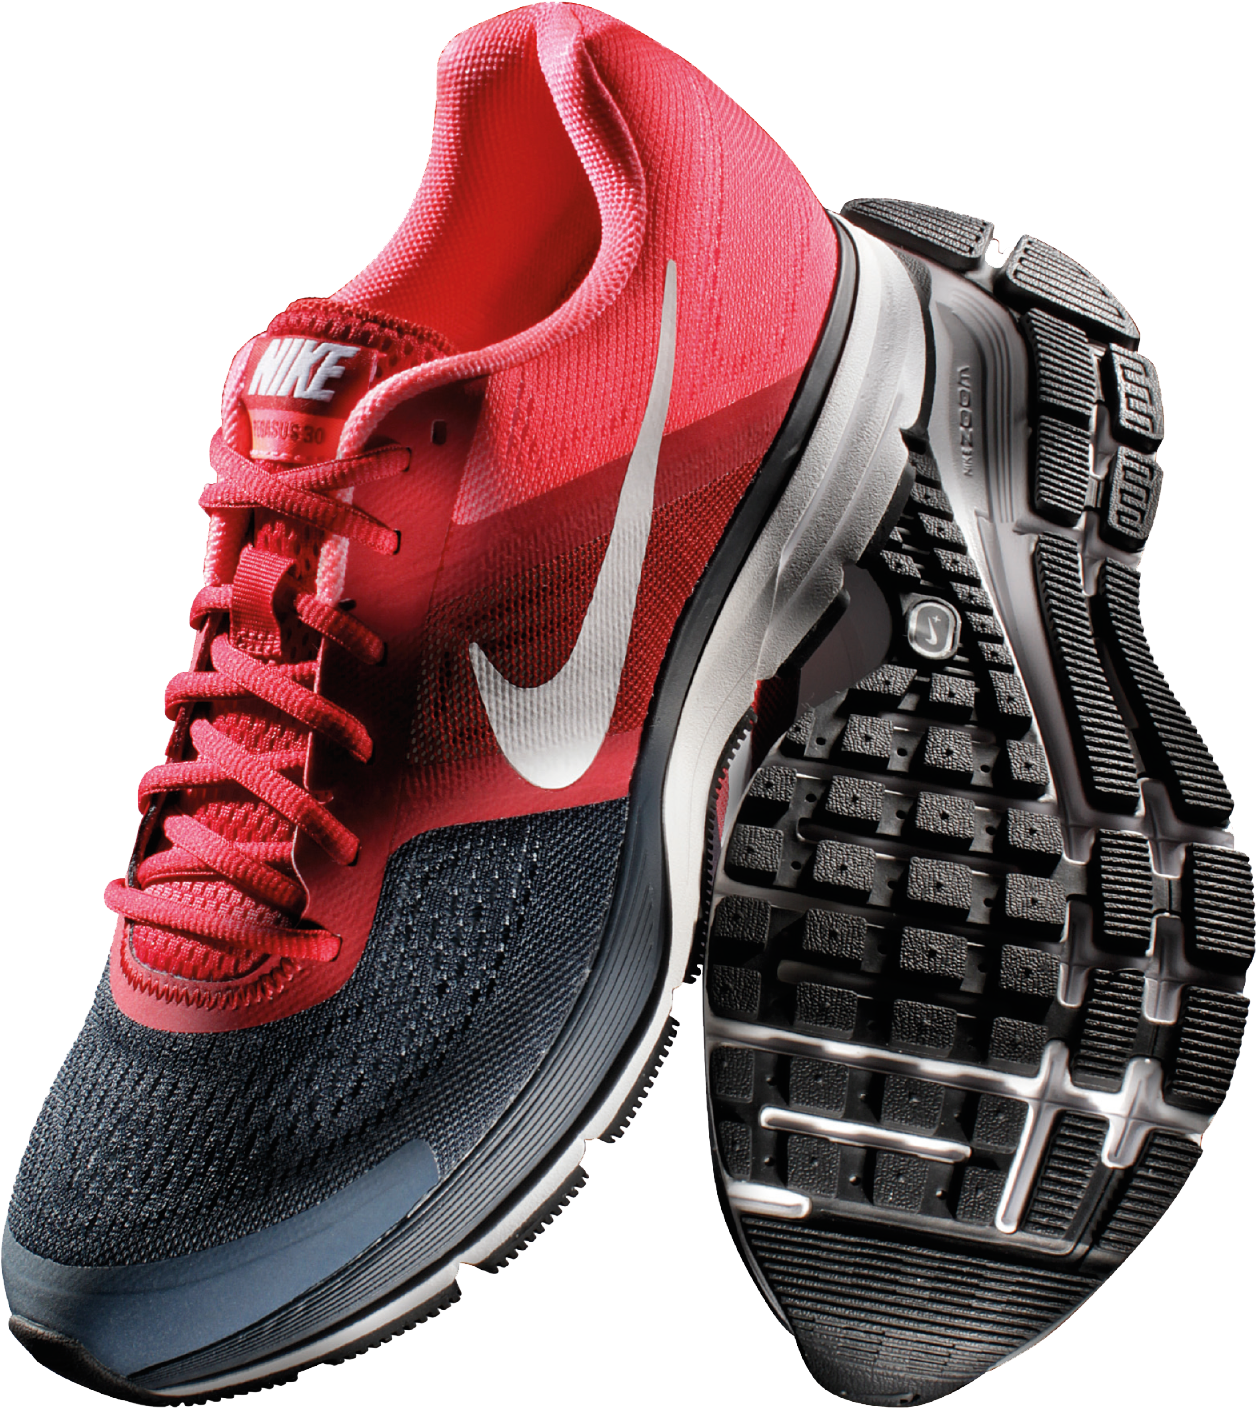 Redand Black Nike Running Shoes PNG